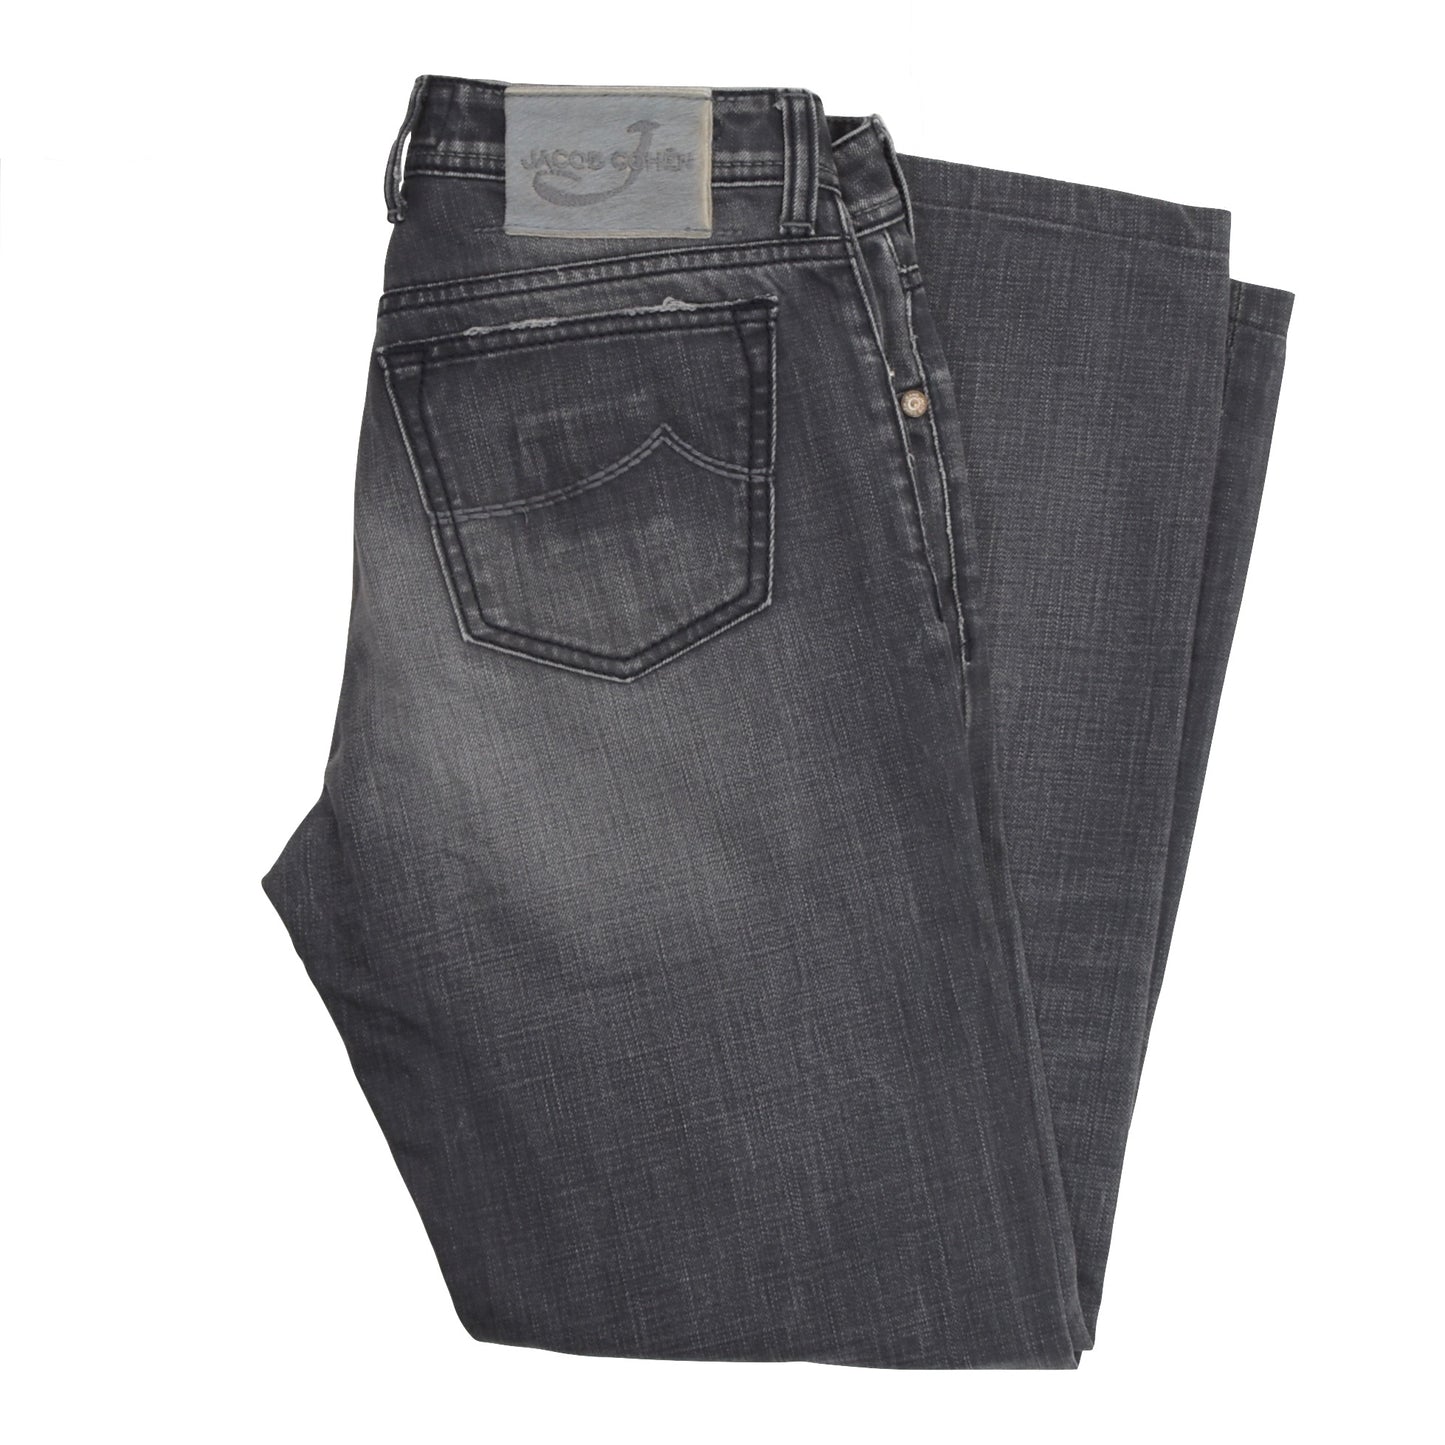 Jacob Cohen Jeans Model J688 Size W32